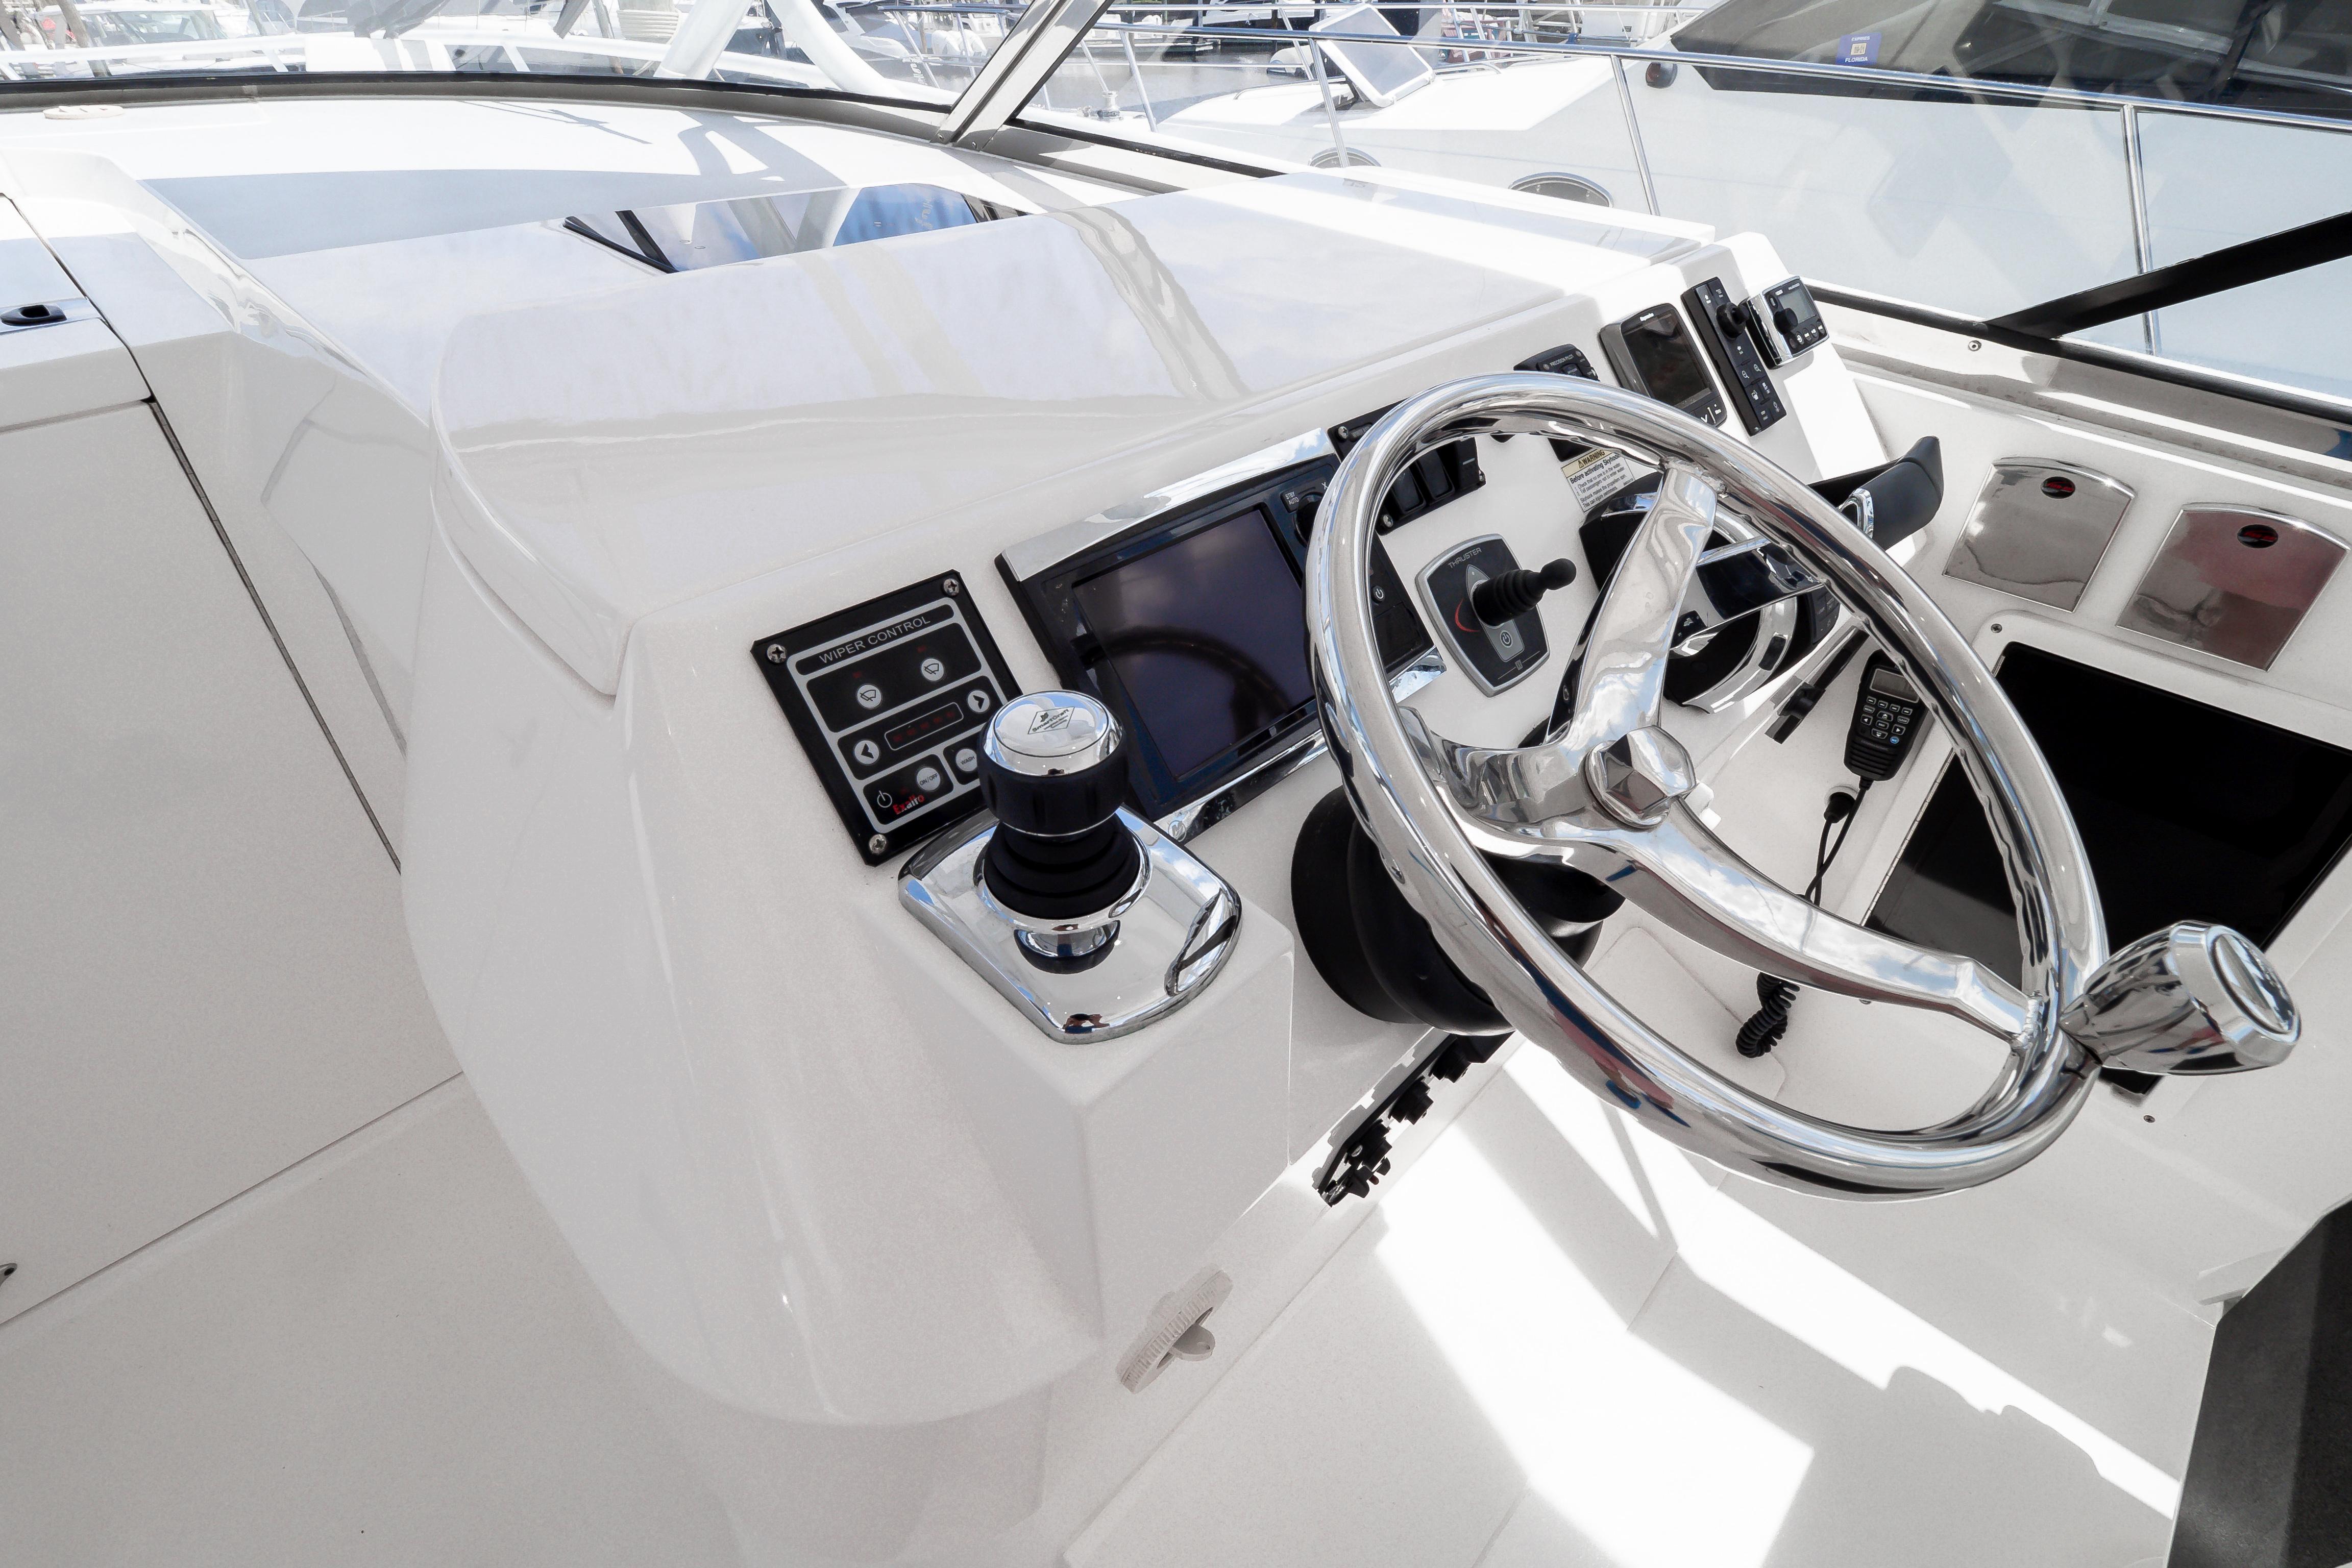 2016 Intrepid 430 Sport Yacht